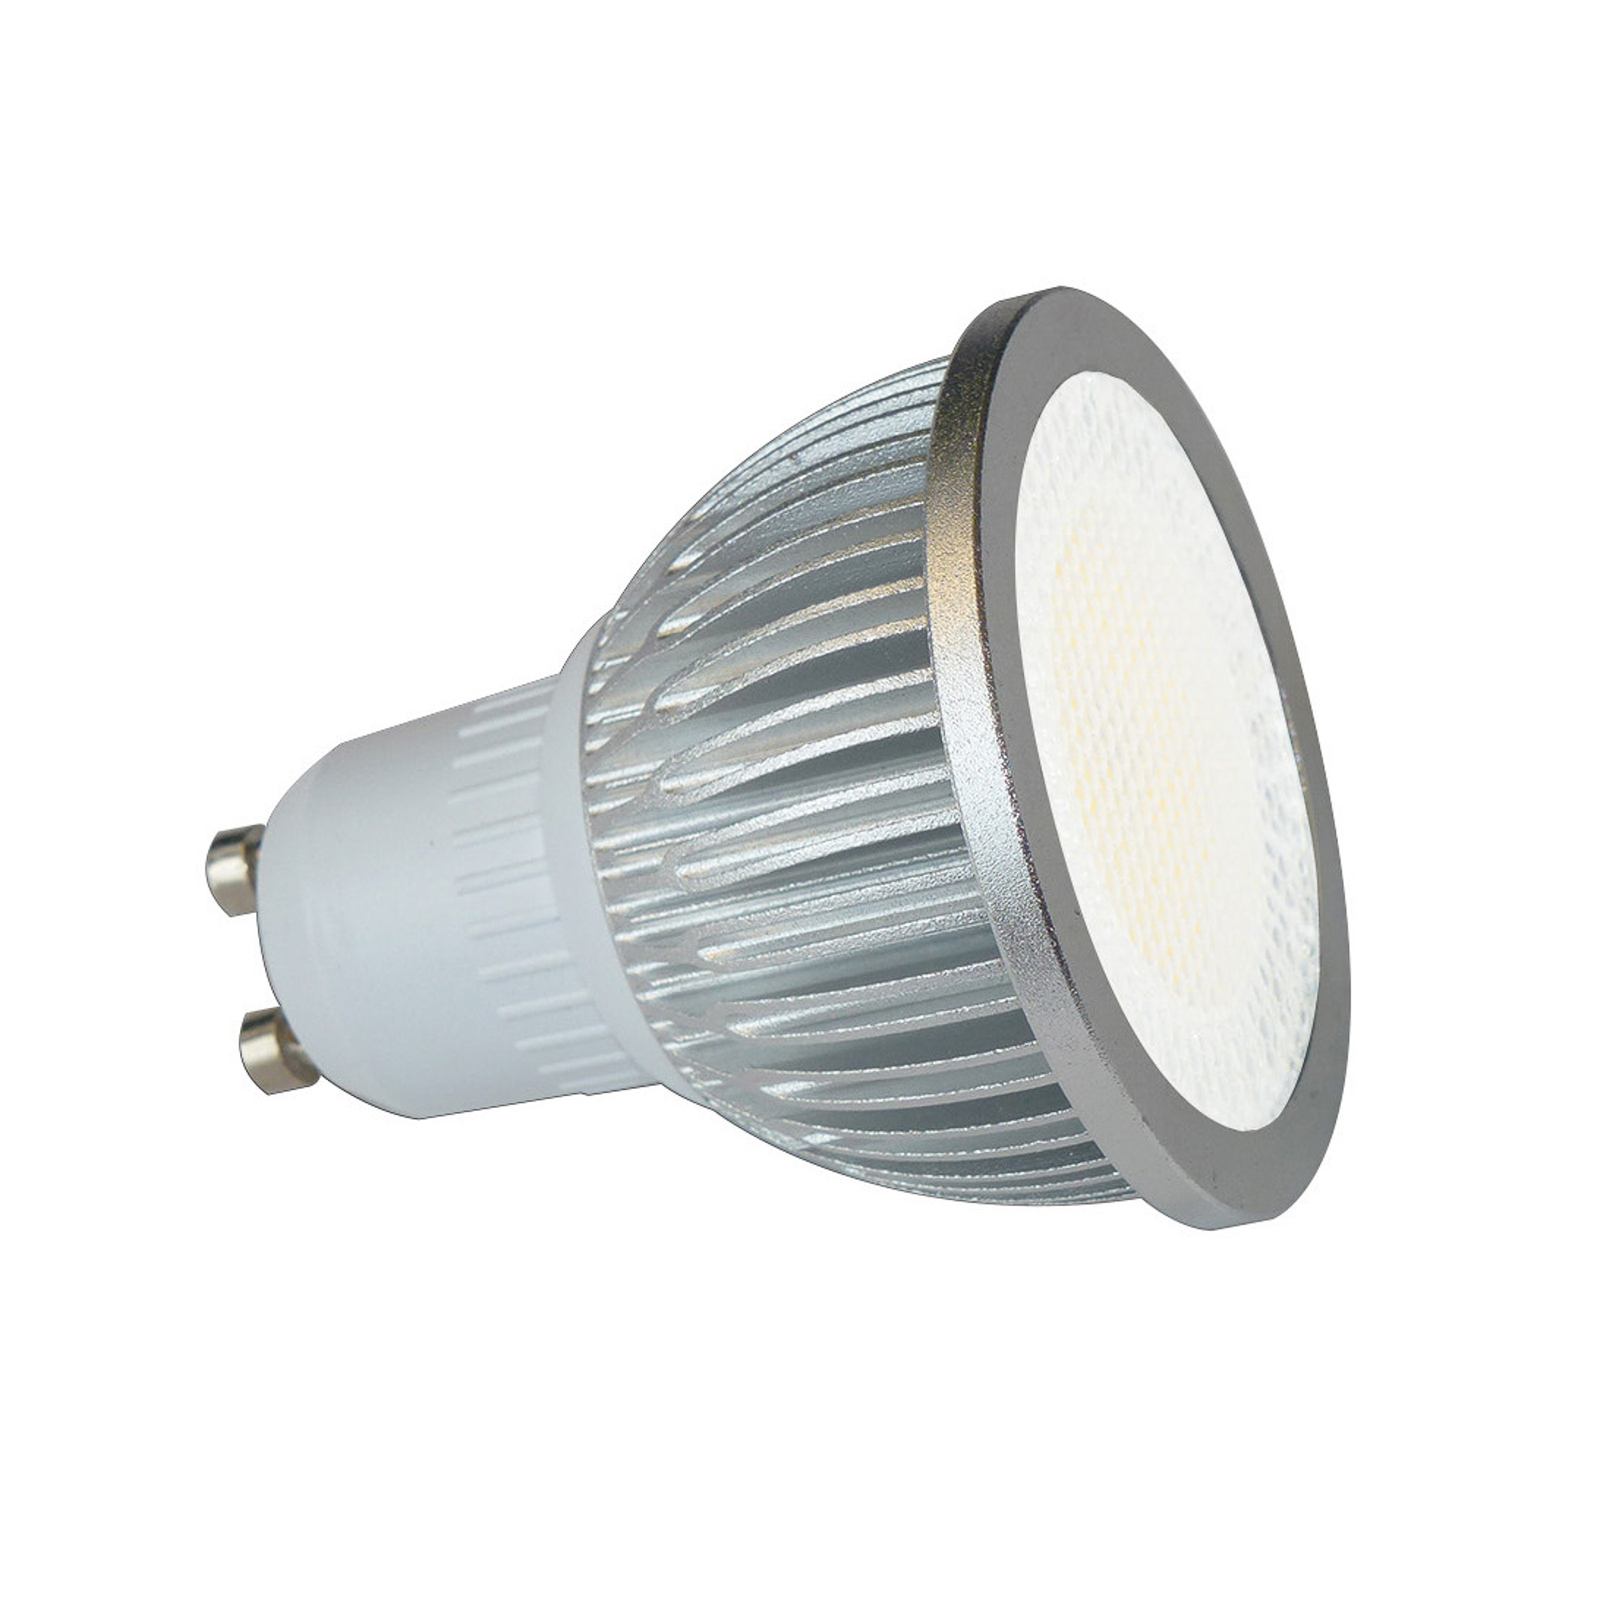 Alto voltaje reflectora LED GU10 5W 830 85° 4 ud